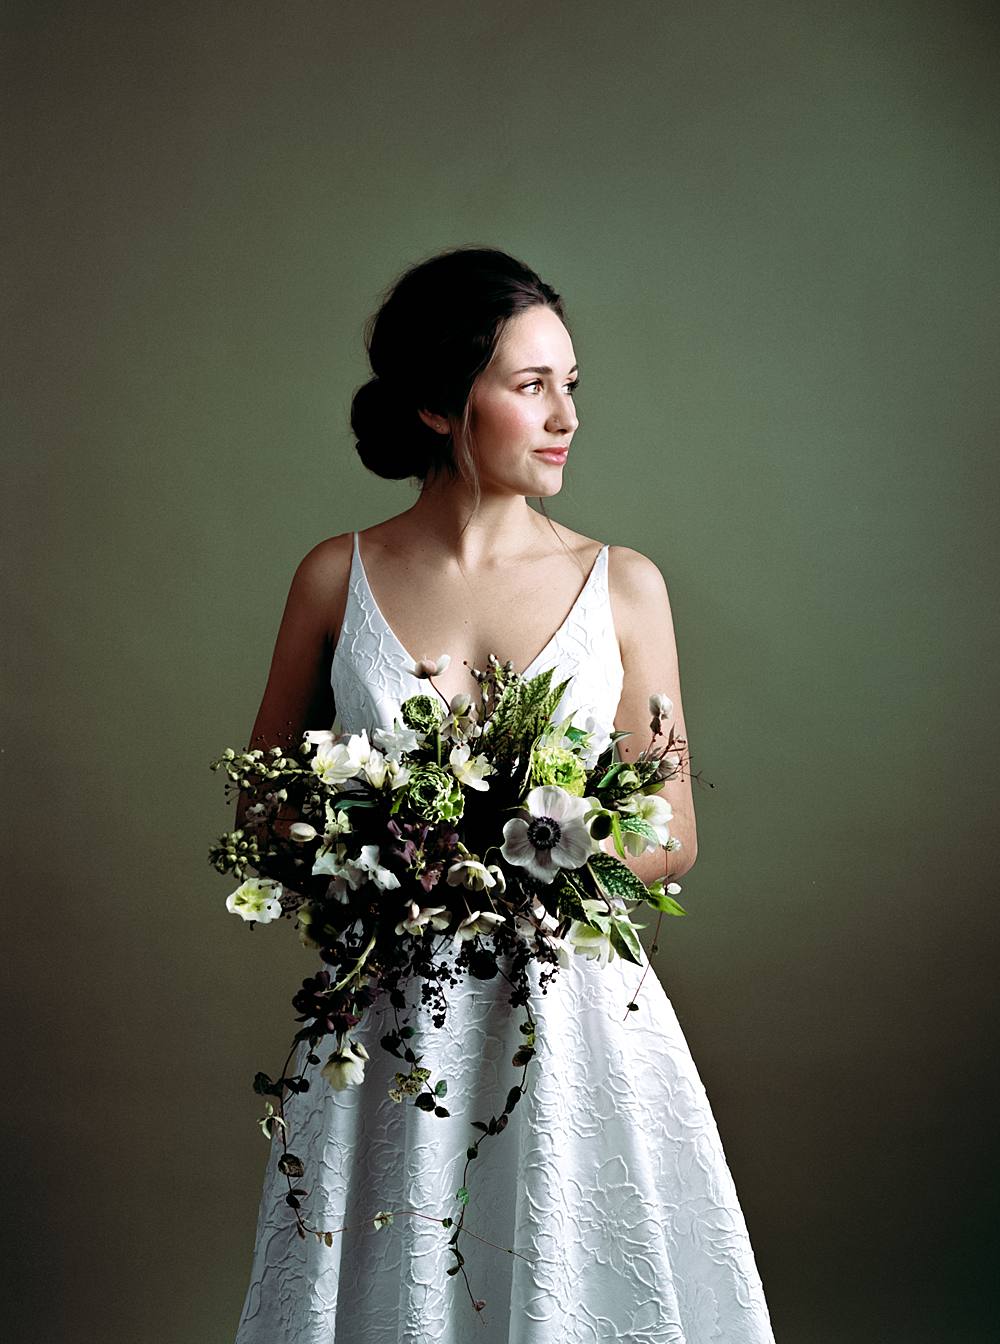 2002 charleston studio bridal portrait green seamless florals kodak portra 160 film strobes 00019_web